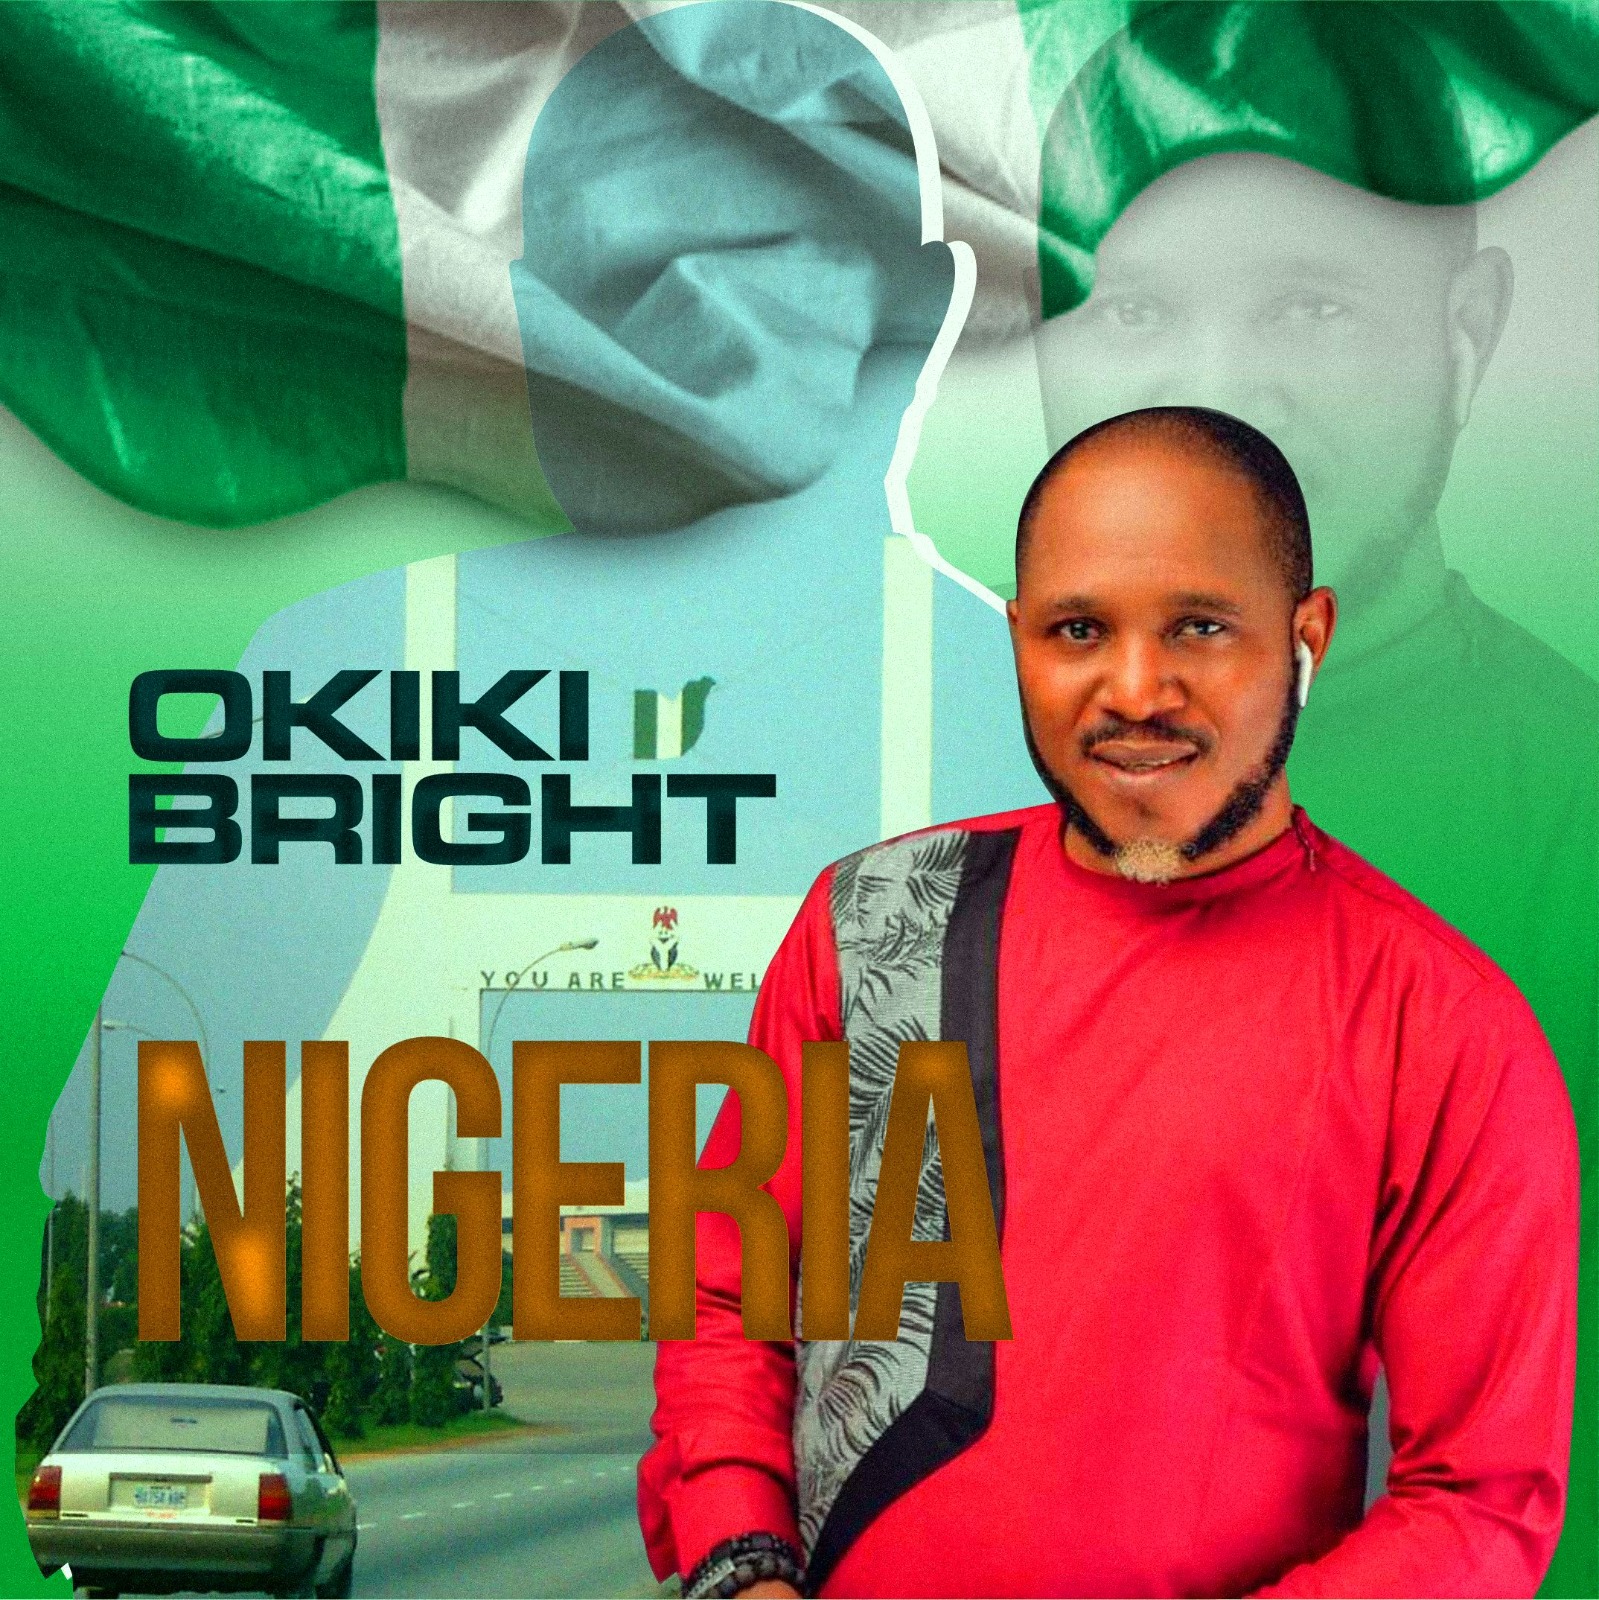 Fuji Act, Okiki Bright To Archive Nigerian Crisis In New Album